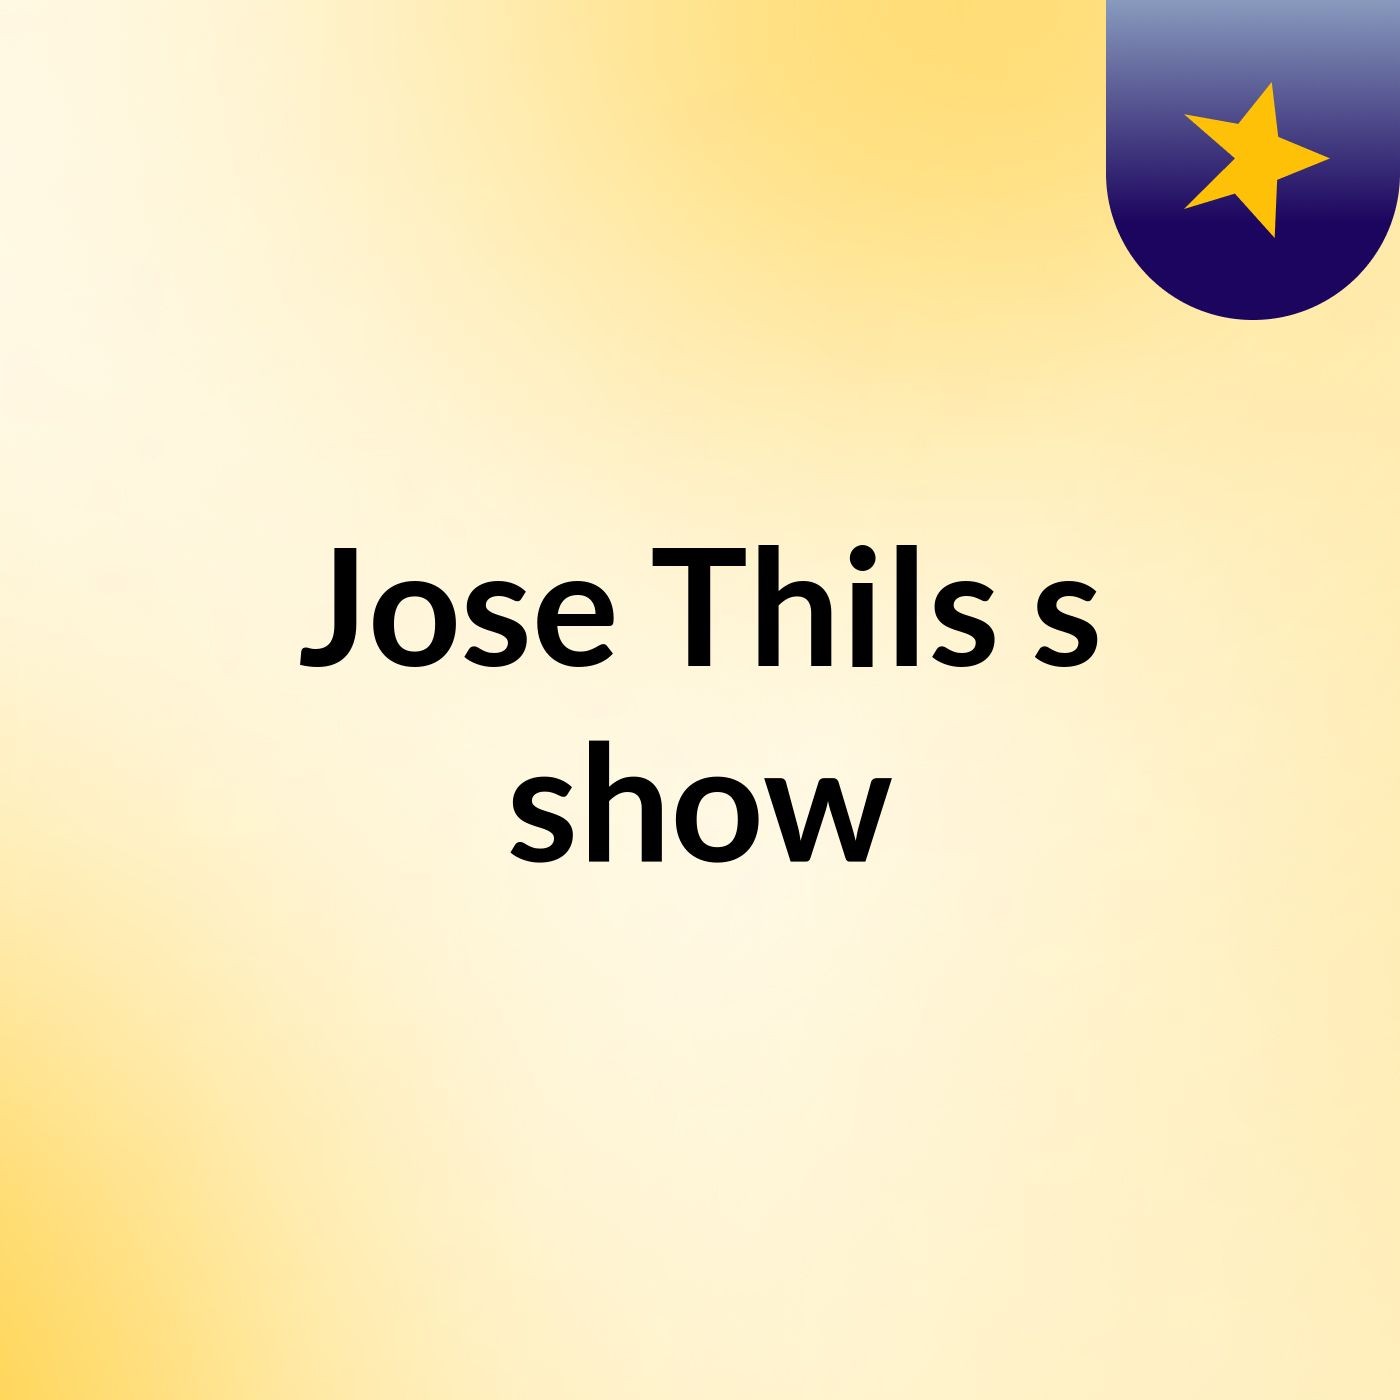 Jose Thils's show